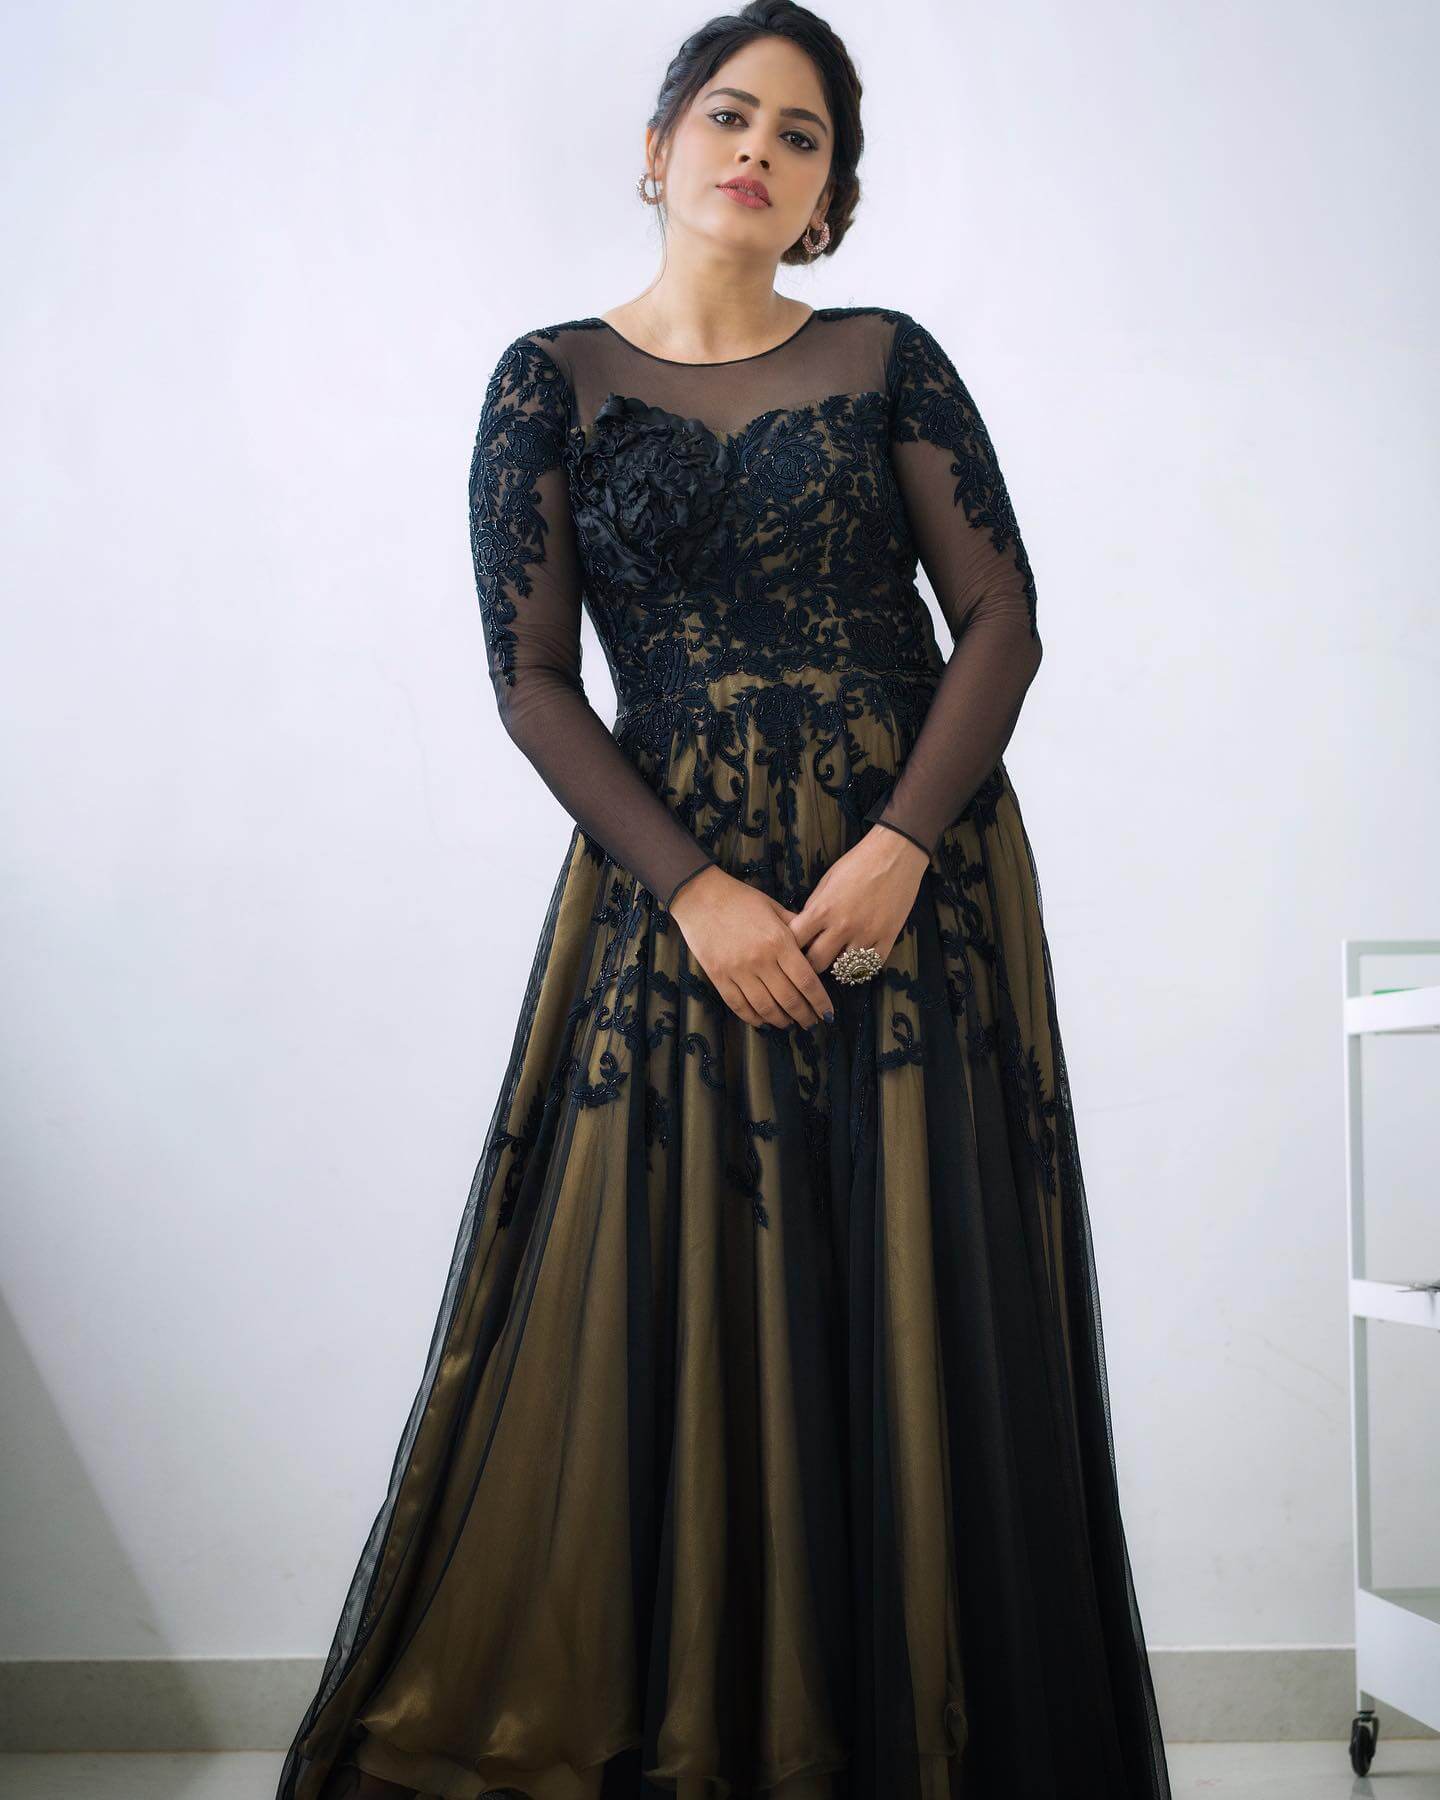 Nandita Swetha Stunning Look In Olive & Black Full Sleeves Gown